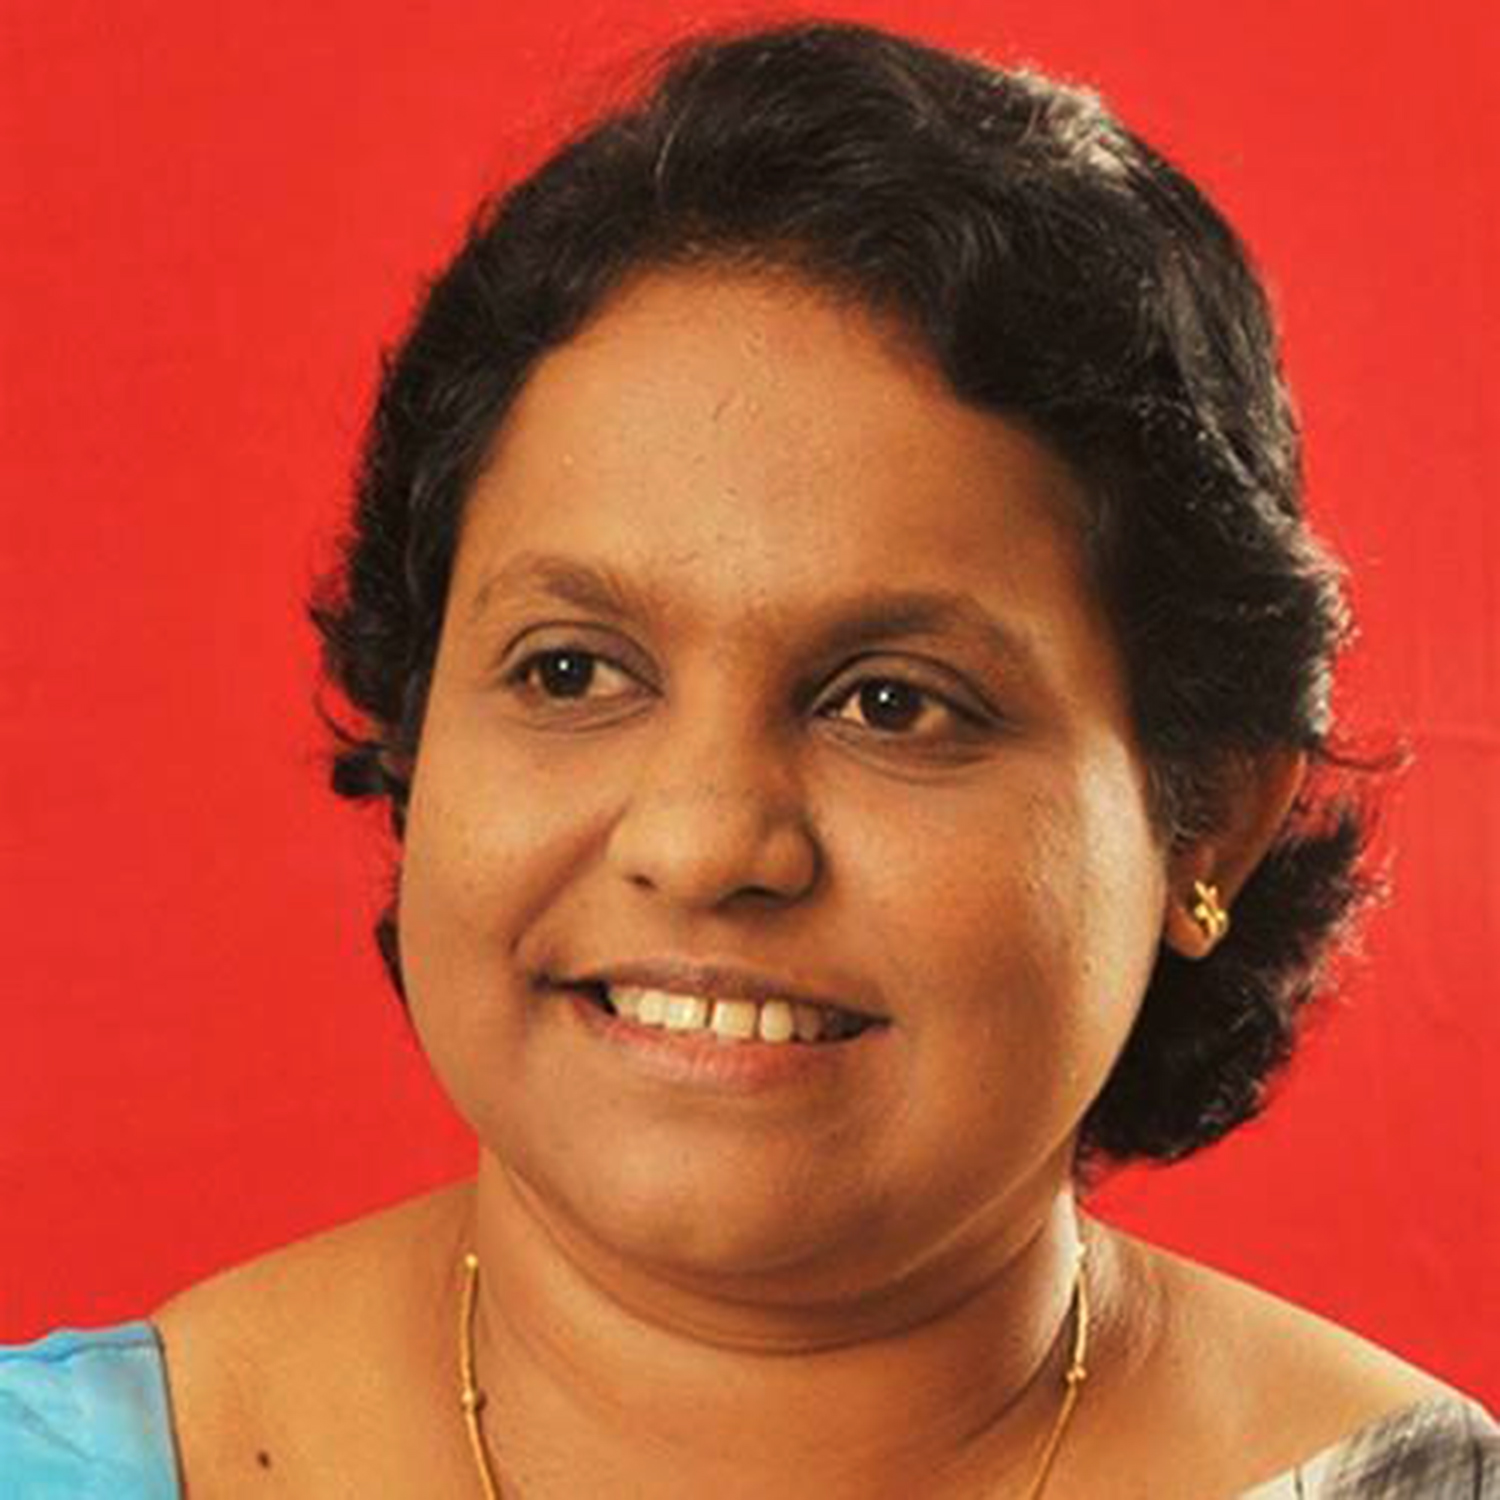 Sri Lanka State Minister injured in road accident